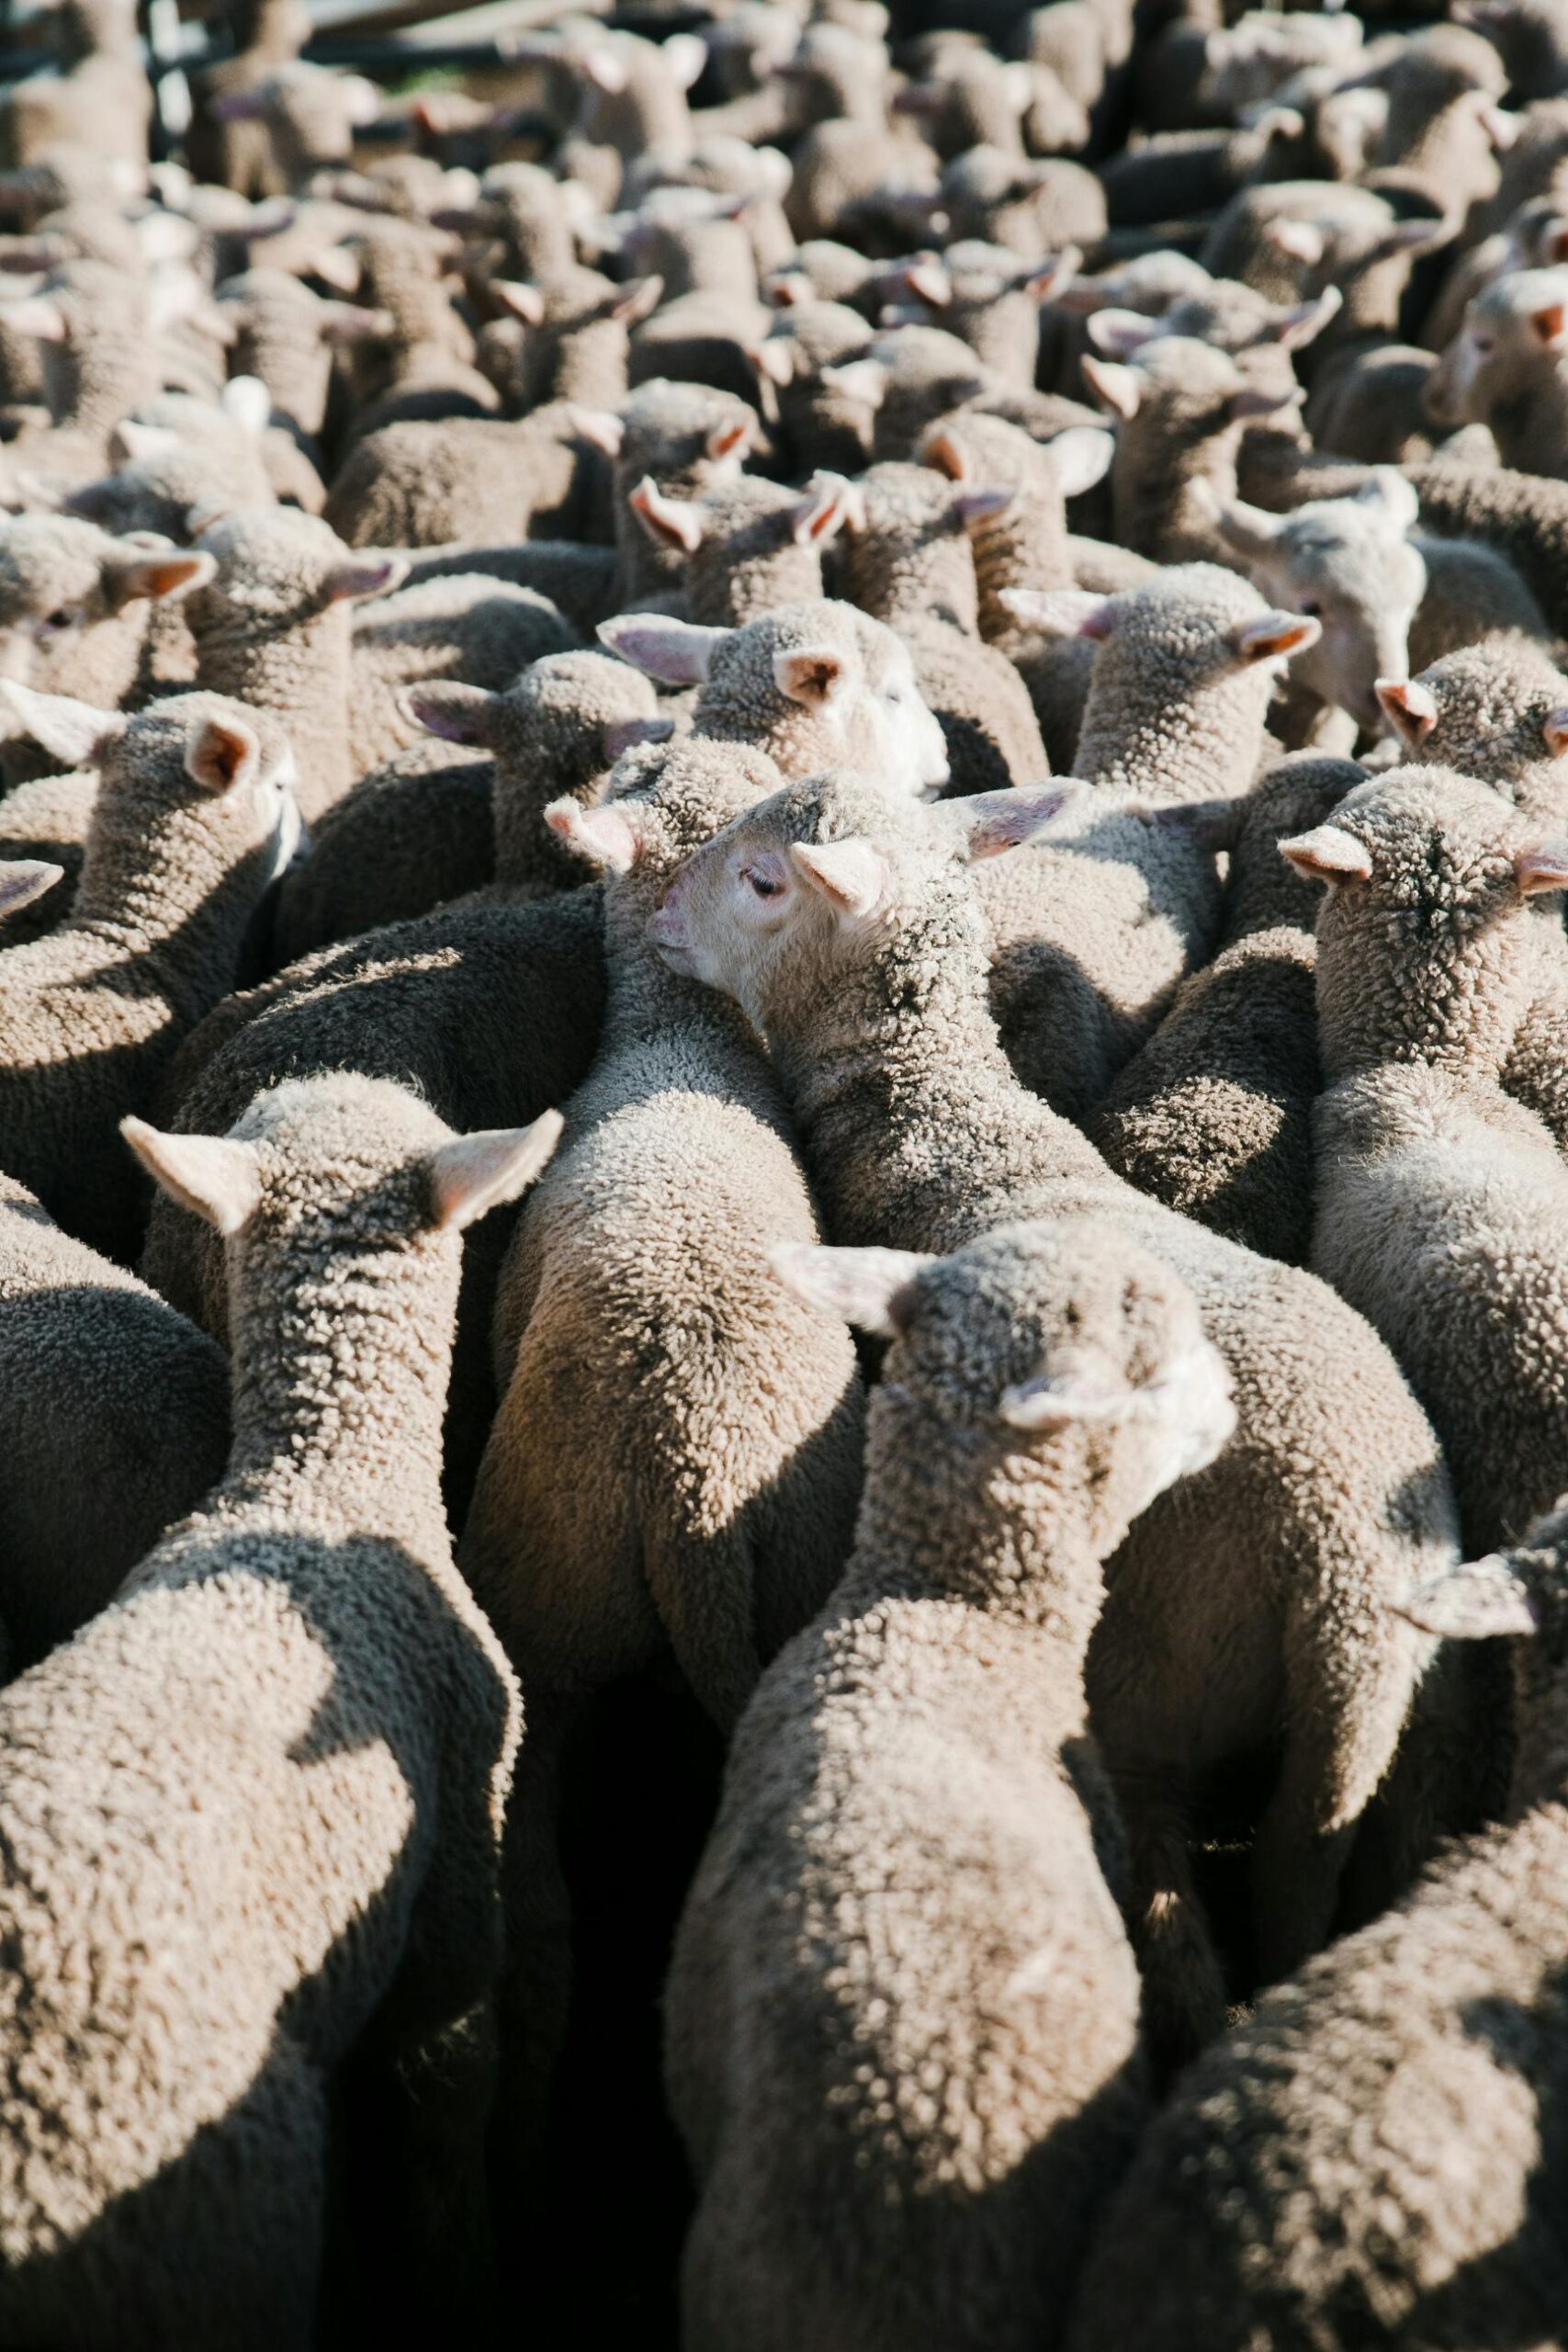 A visualisation of herd behavior: a flock of sheep